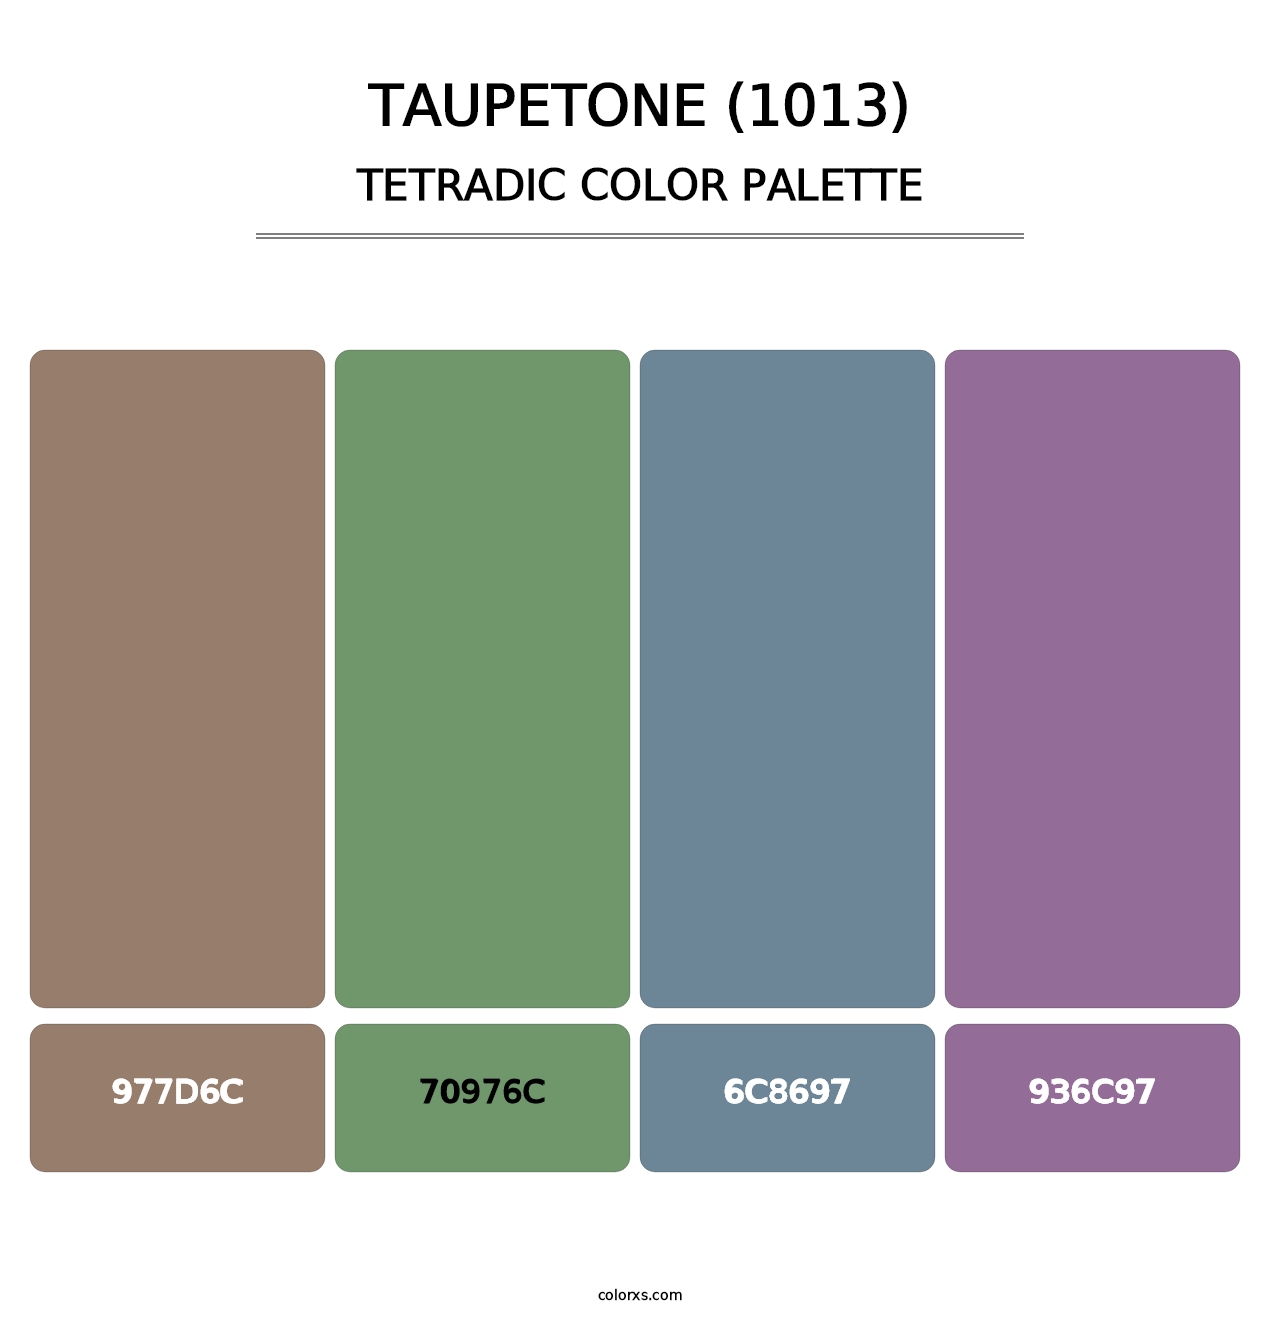 Taupetone (1013) - Tetradic Color Palette